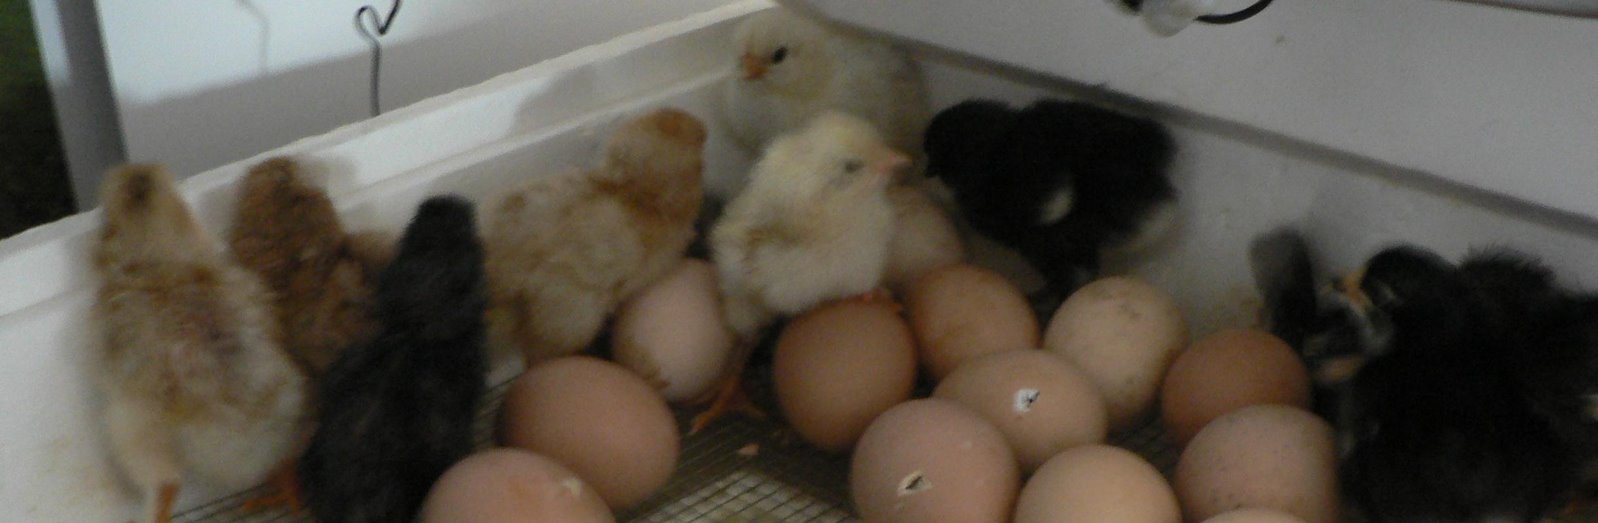 [chicks+in+incubator.jpg]